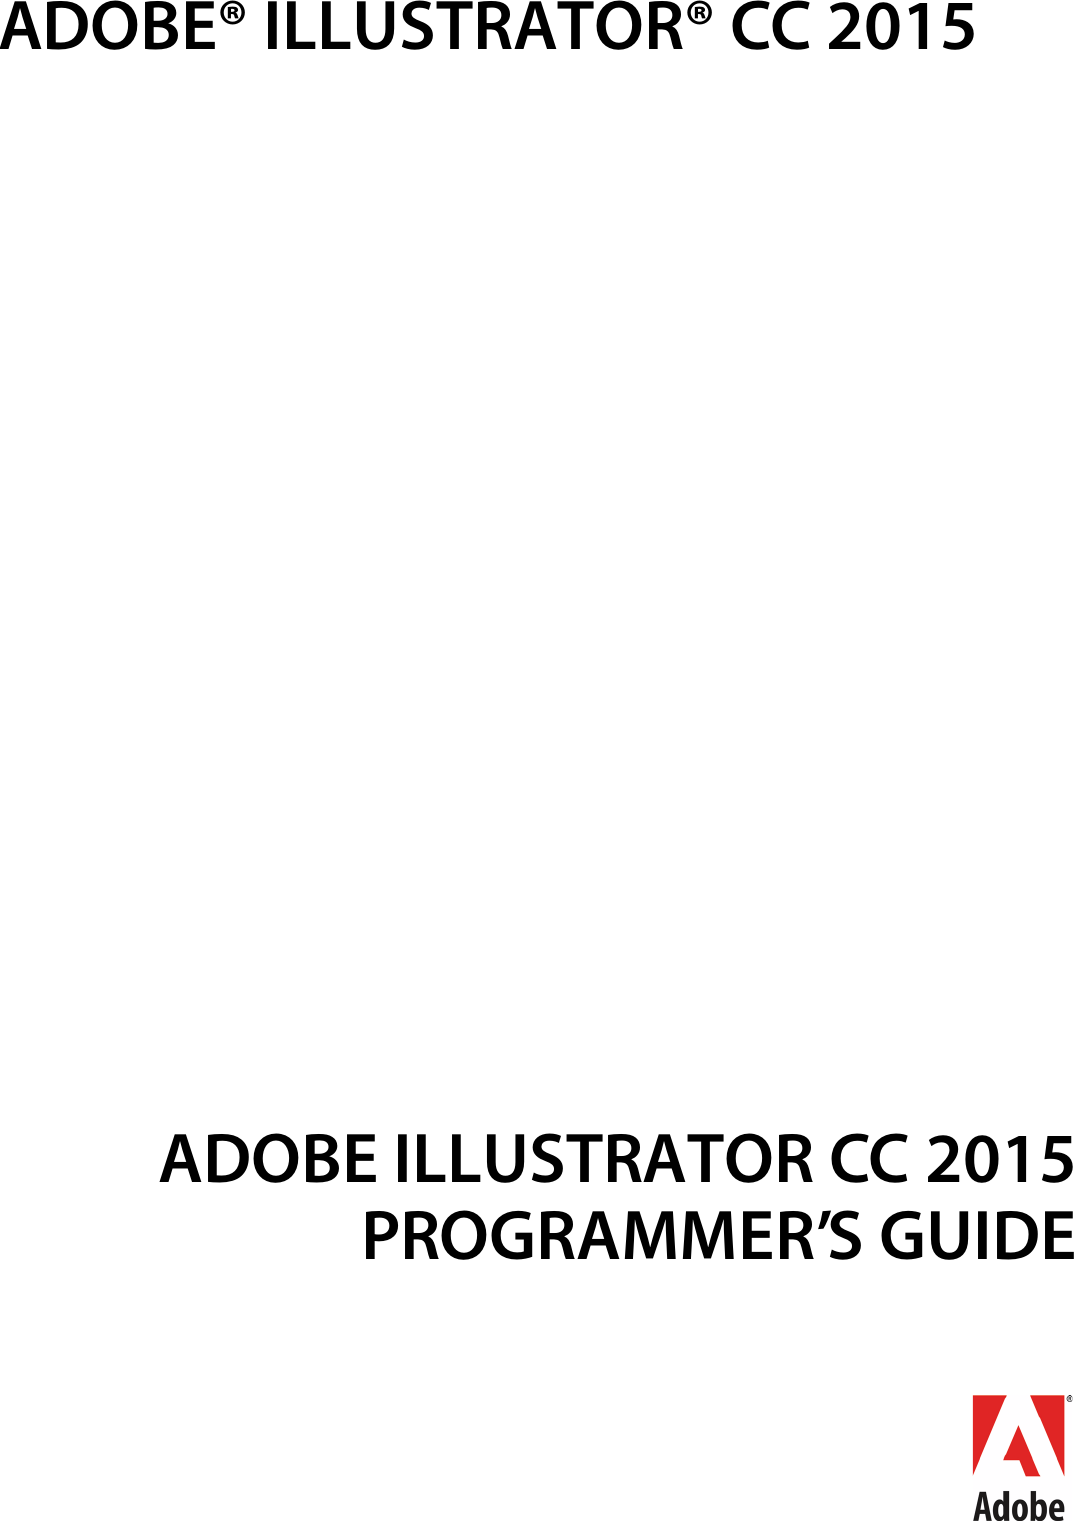 activacion adobe illustrator cc 2015